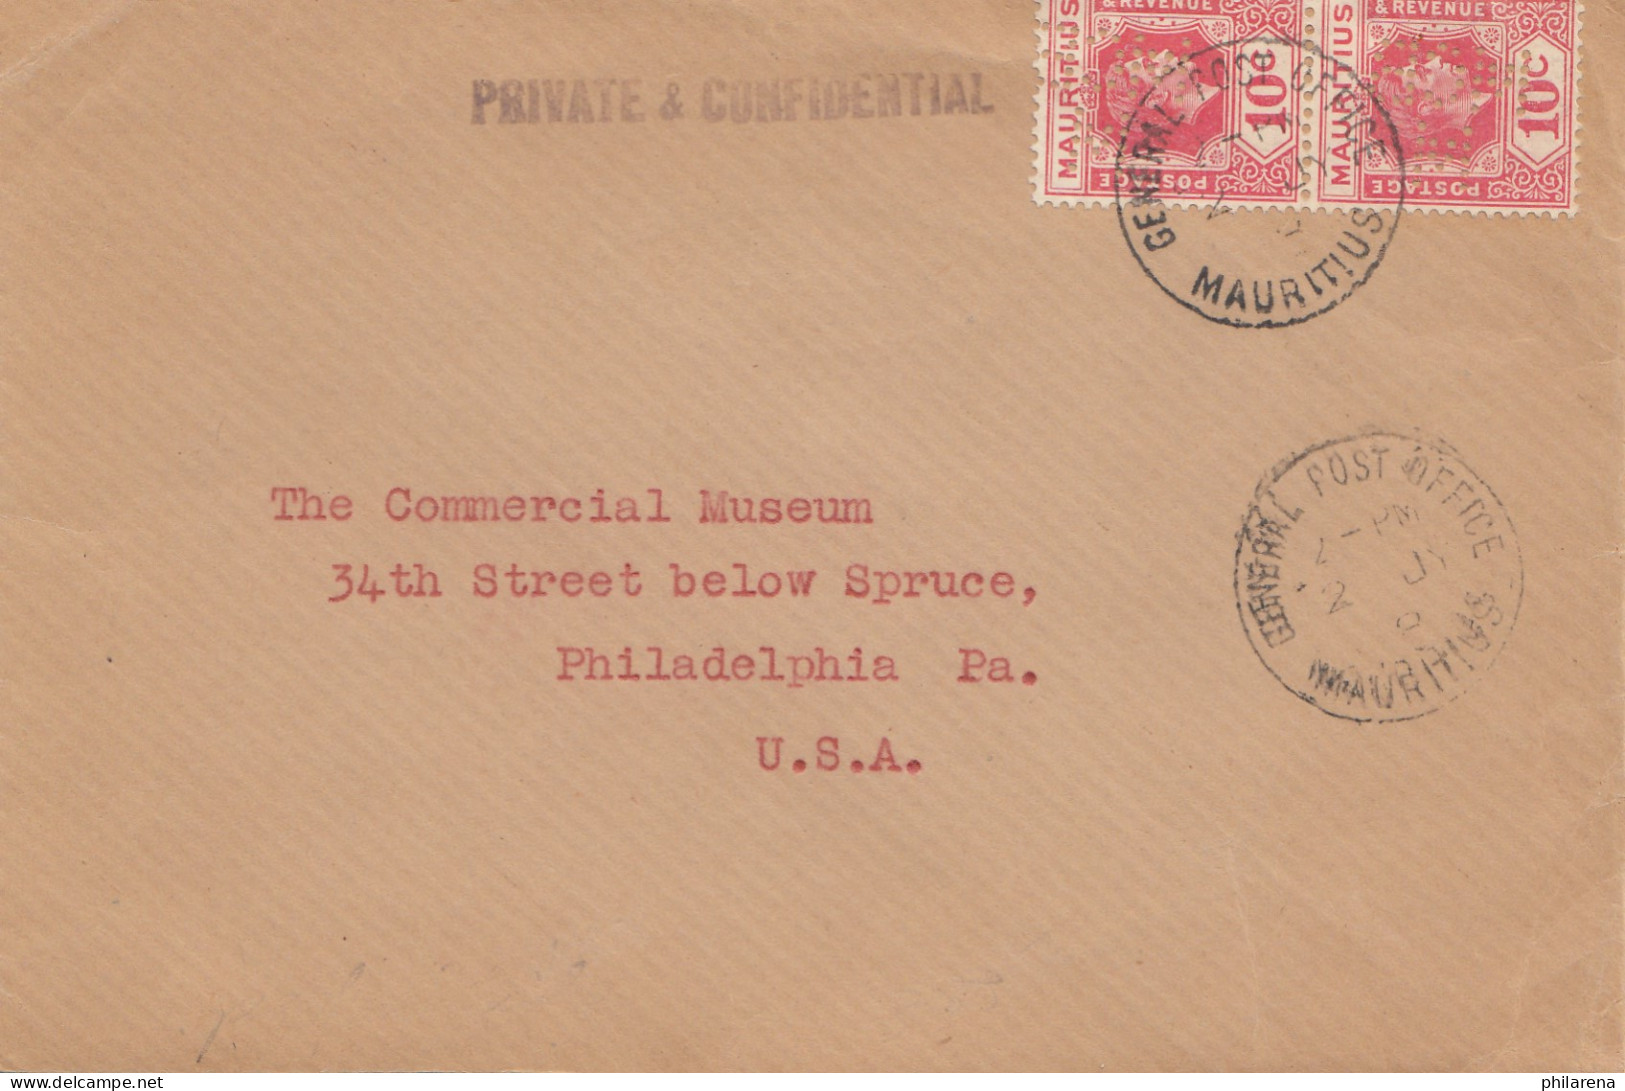 Mauritius: 1908: Port Louis To Philadelphia, Privat & Confidential, Perfin - Maurice (1968-...)